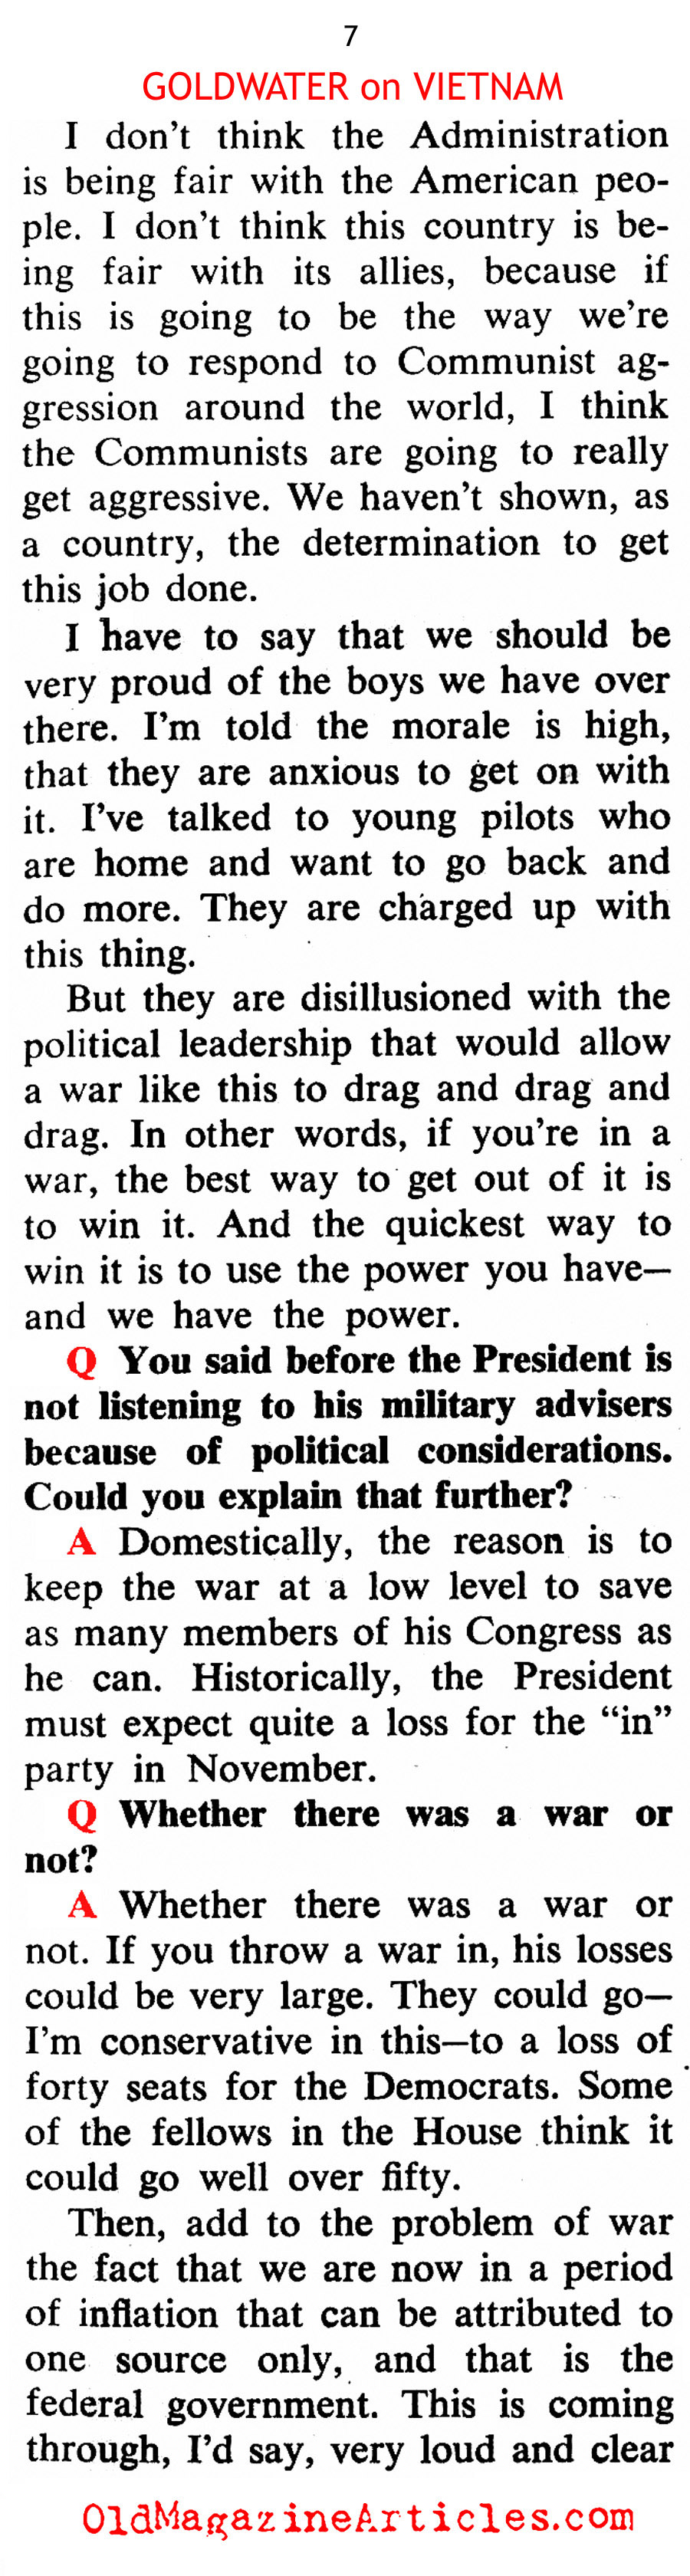 Goldwater on Vietnam (Coronet Magazine, 1966)